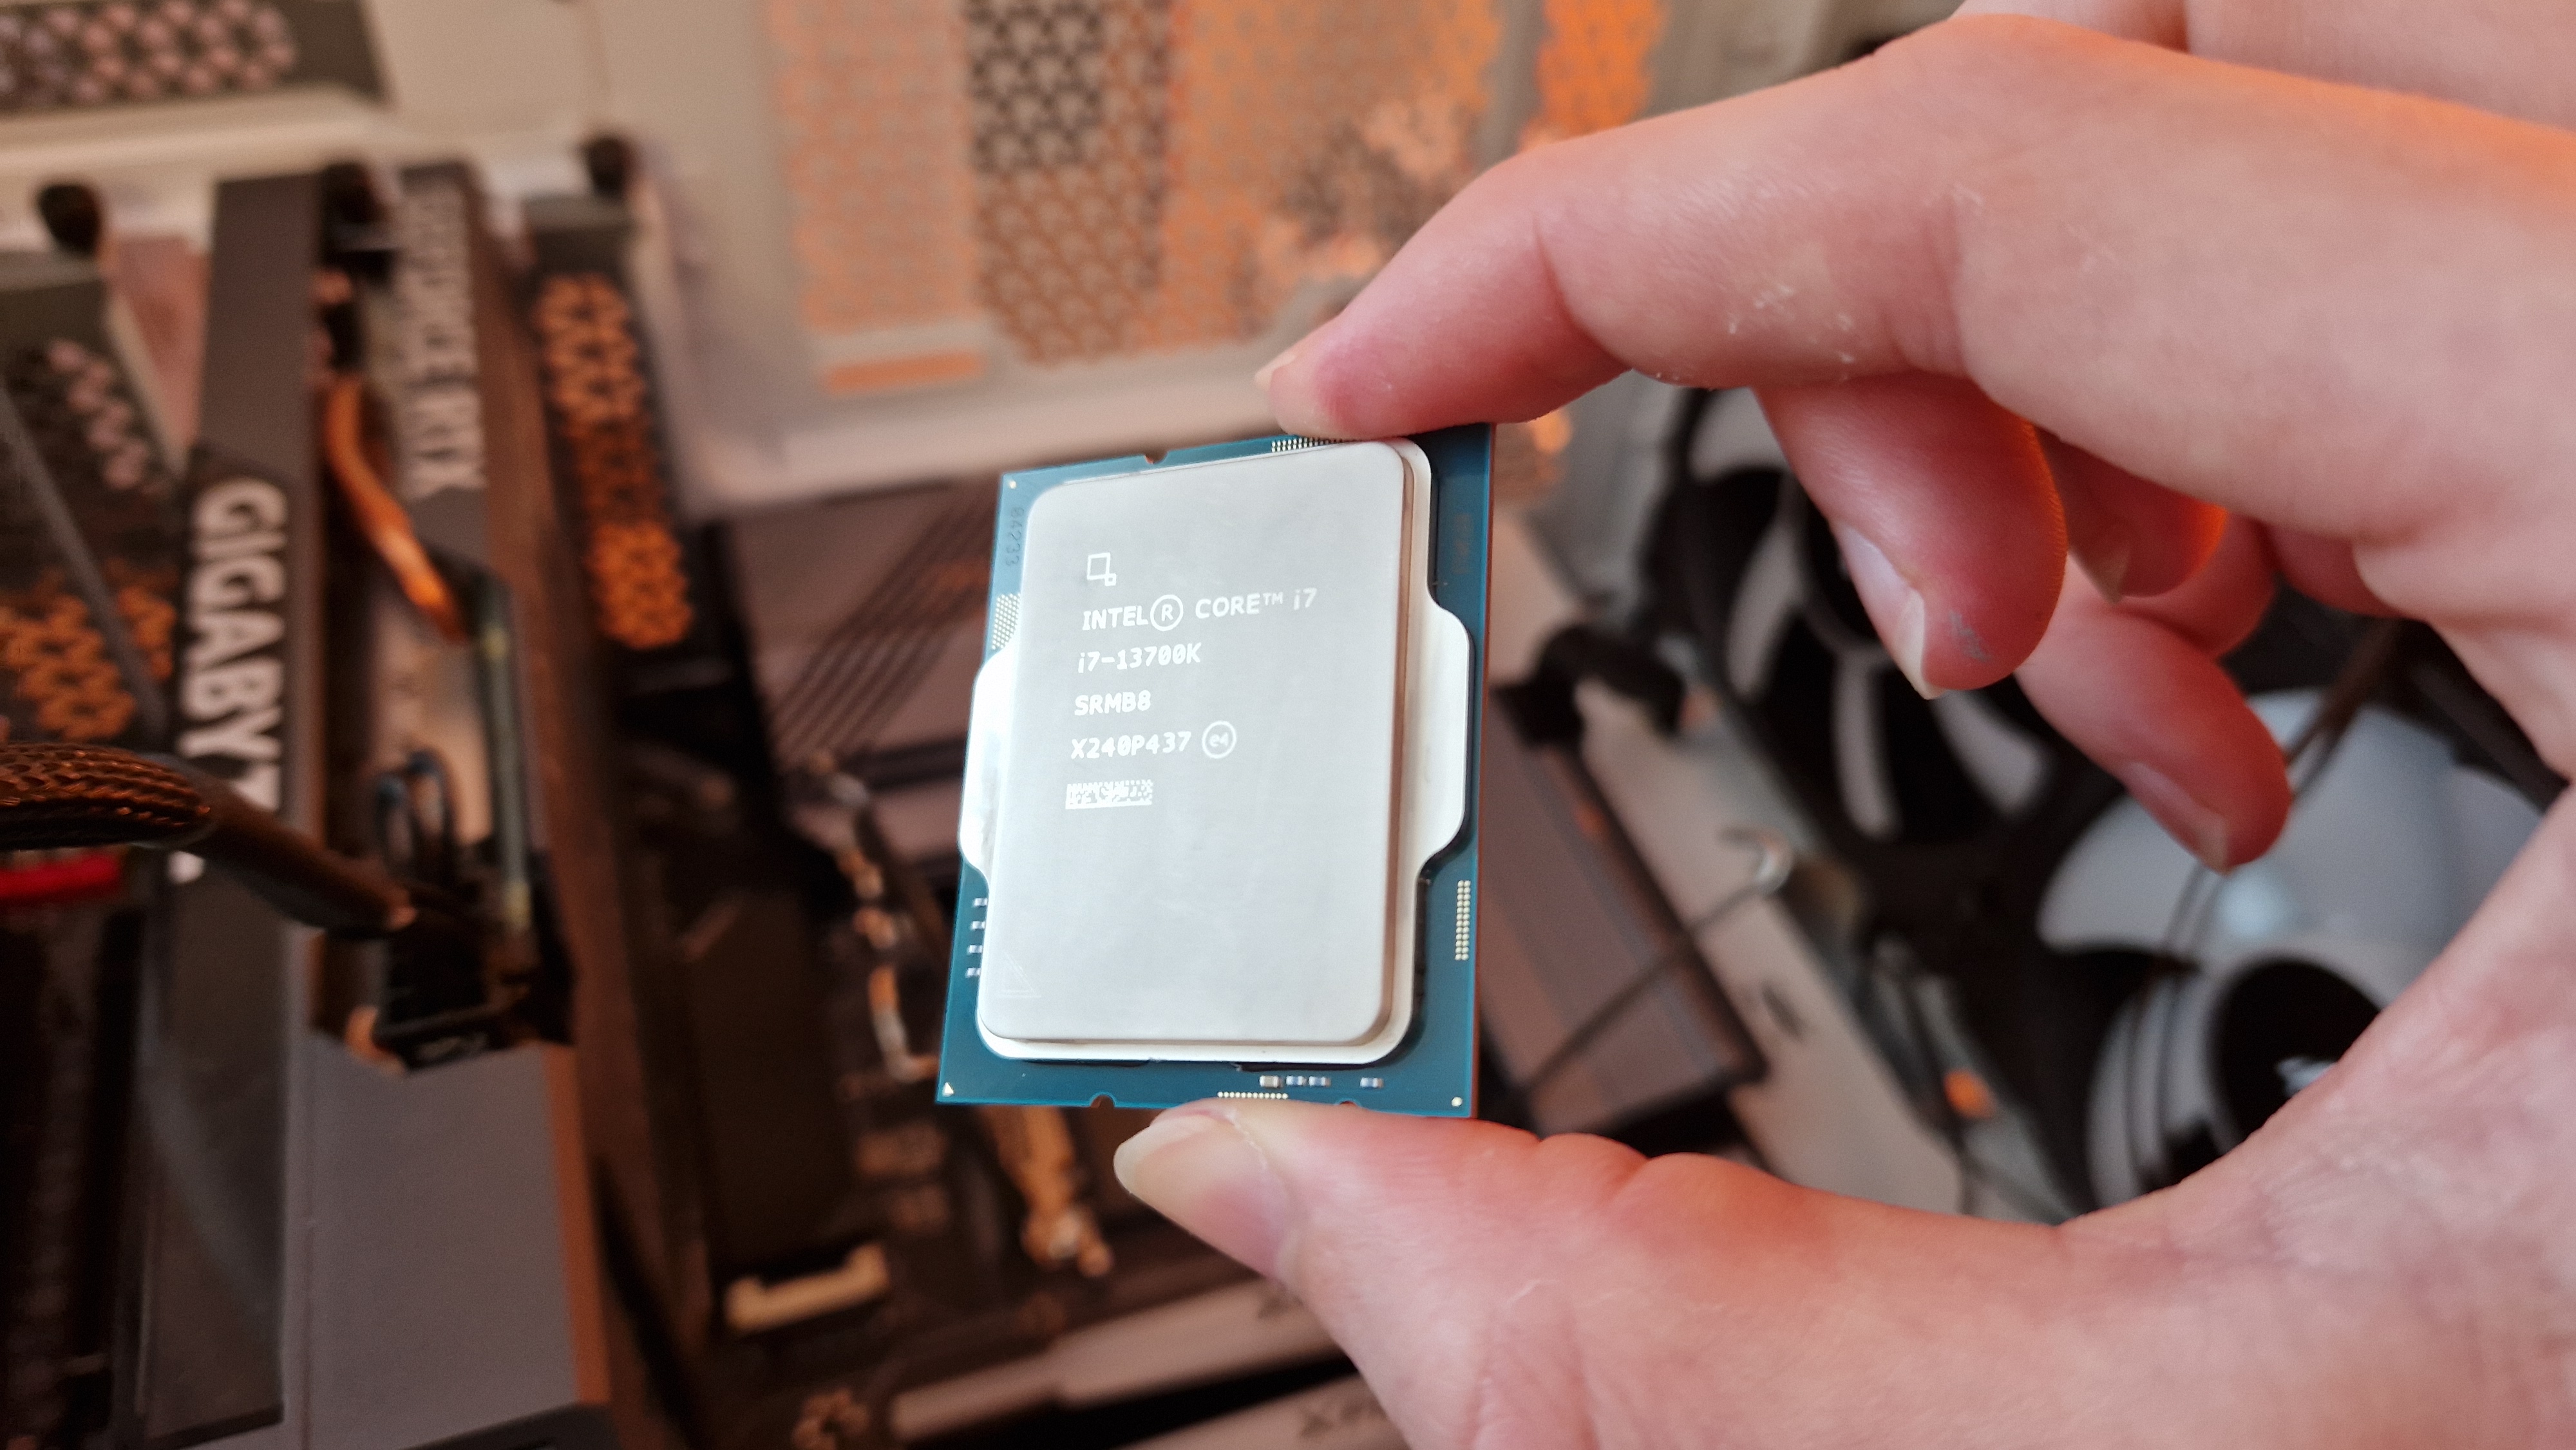 Intel® Core™ i7-13700K 13TH GEN PROCESSOR (BOX NO FAN)